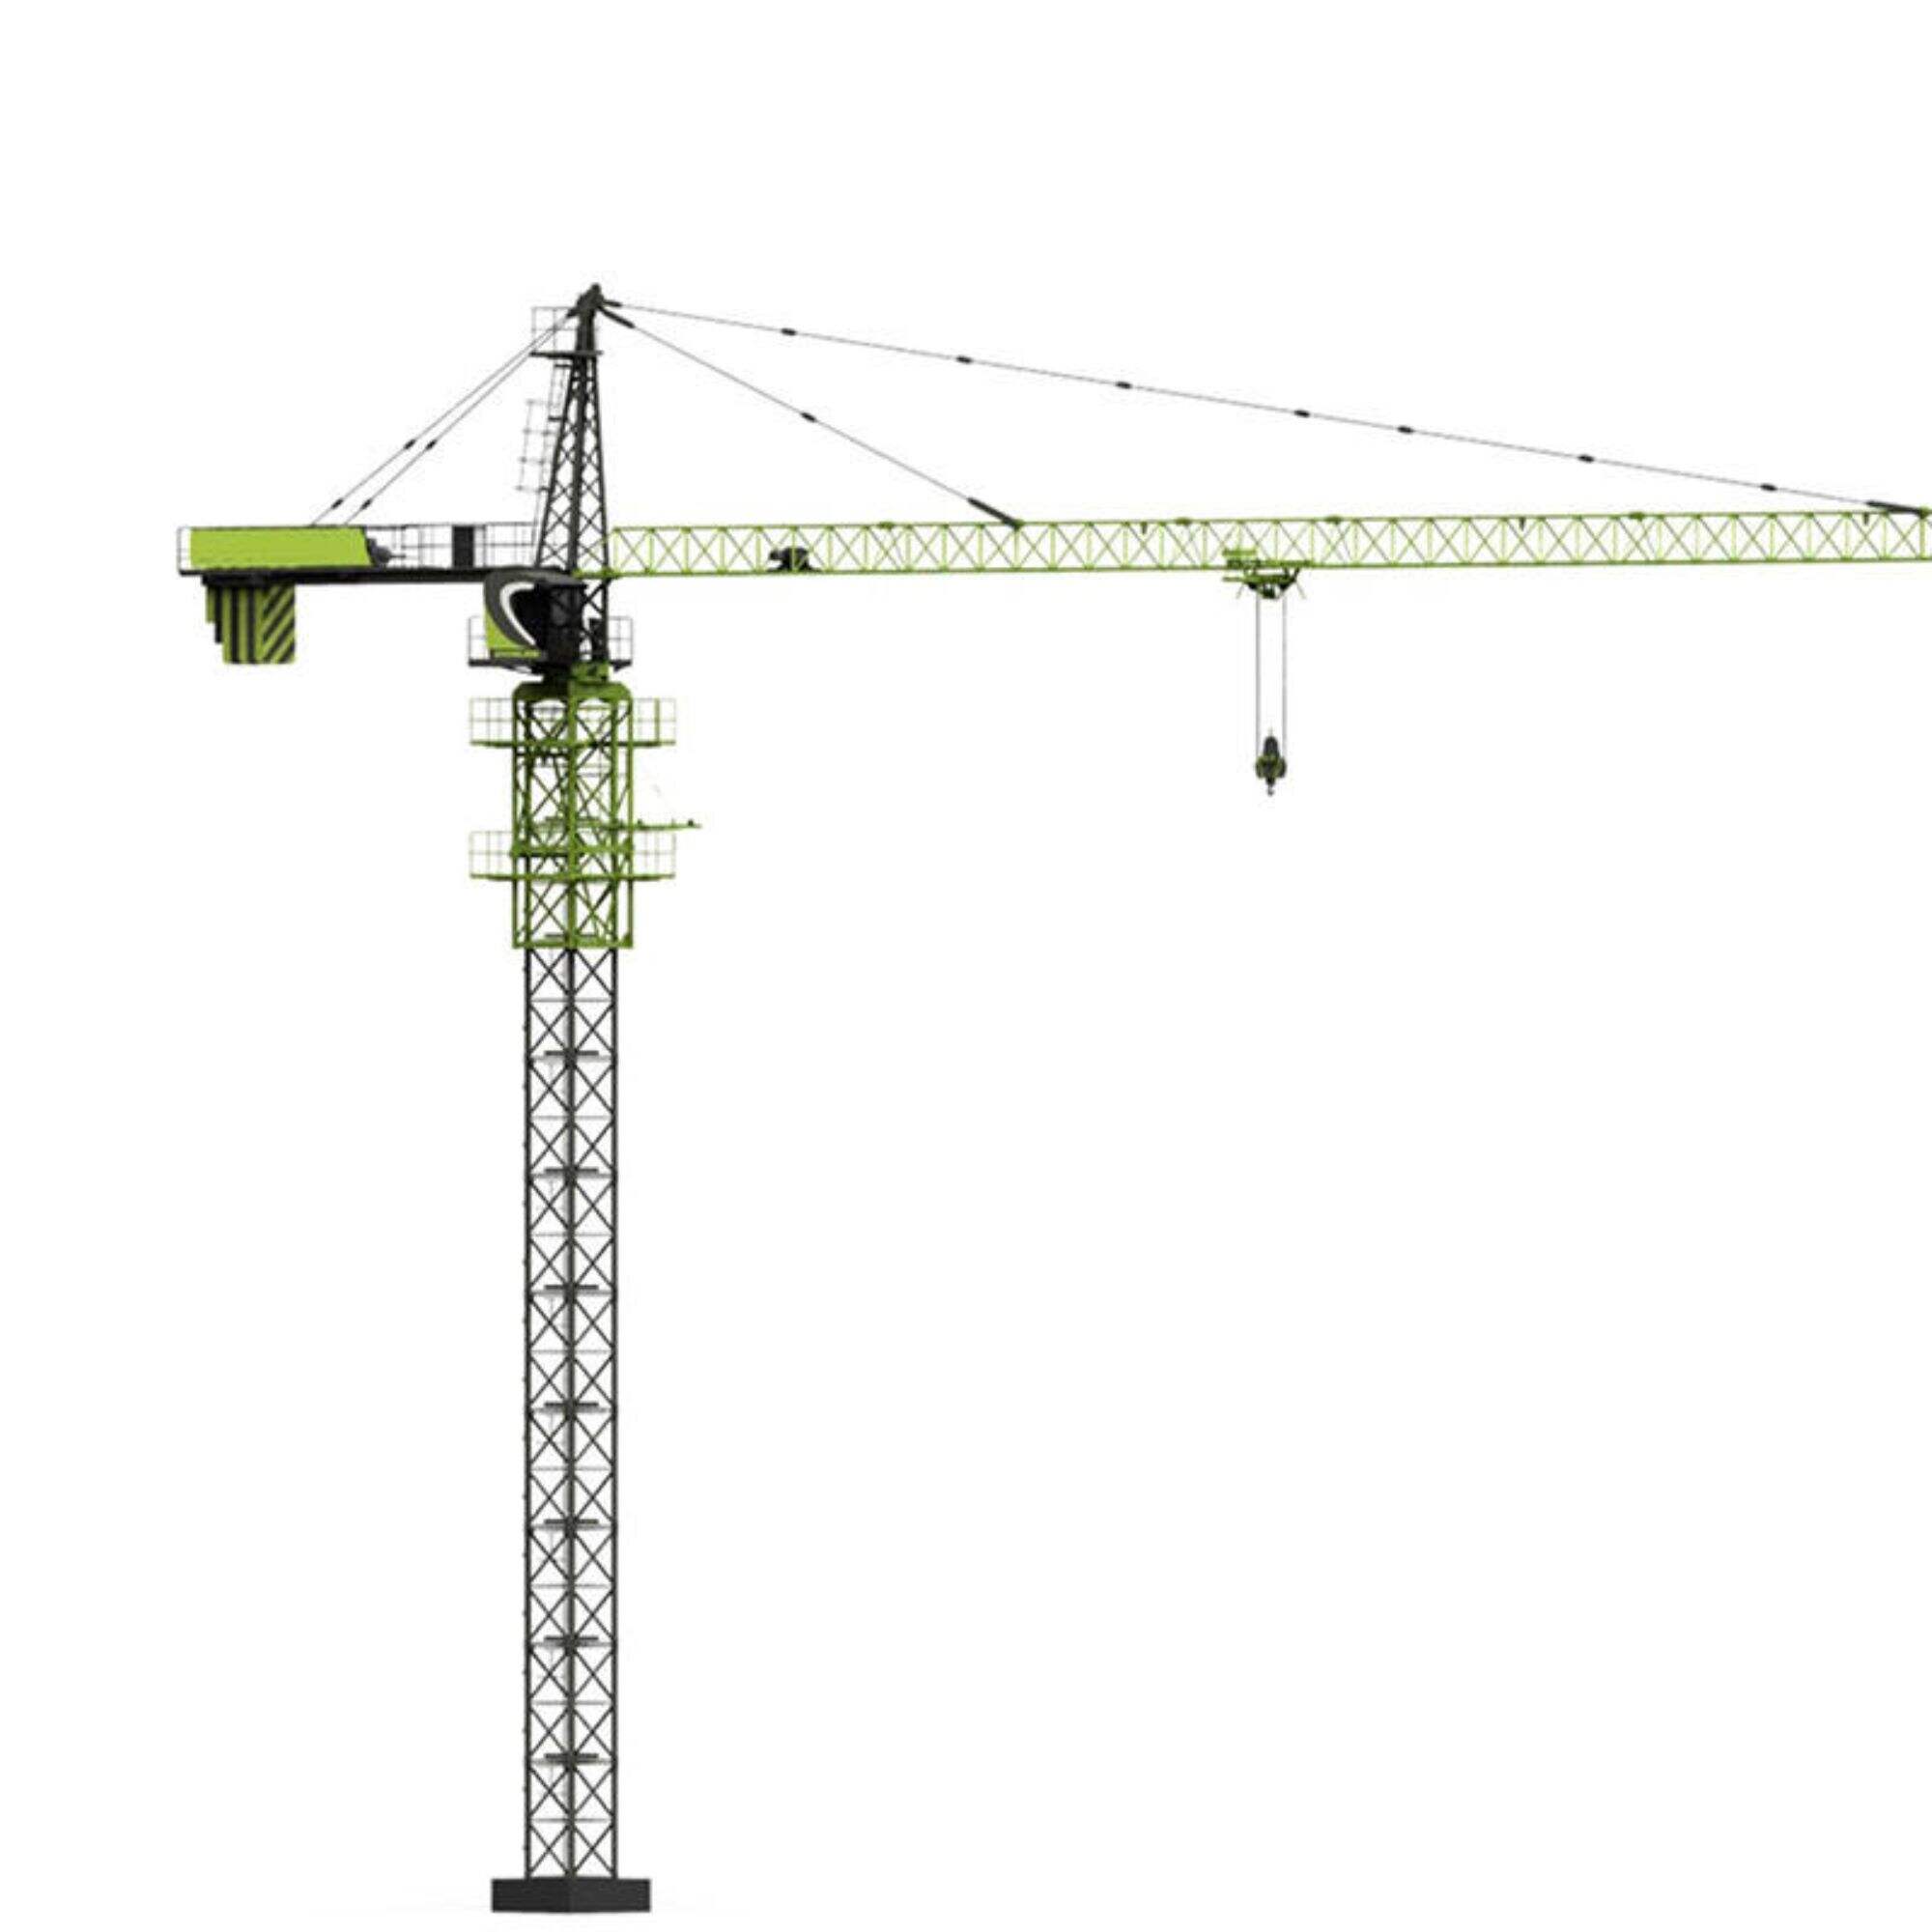 Zoomlion 240 Ton Tower Crane D5200-240